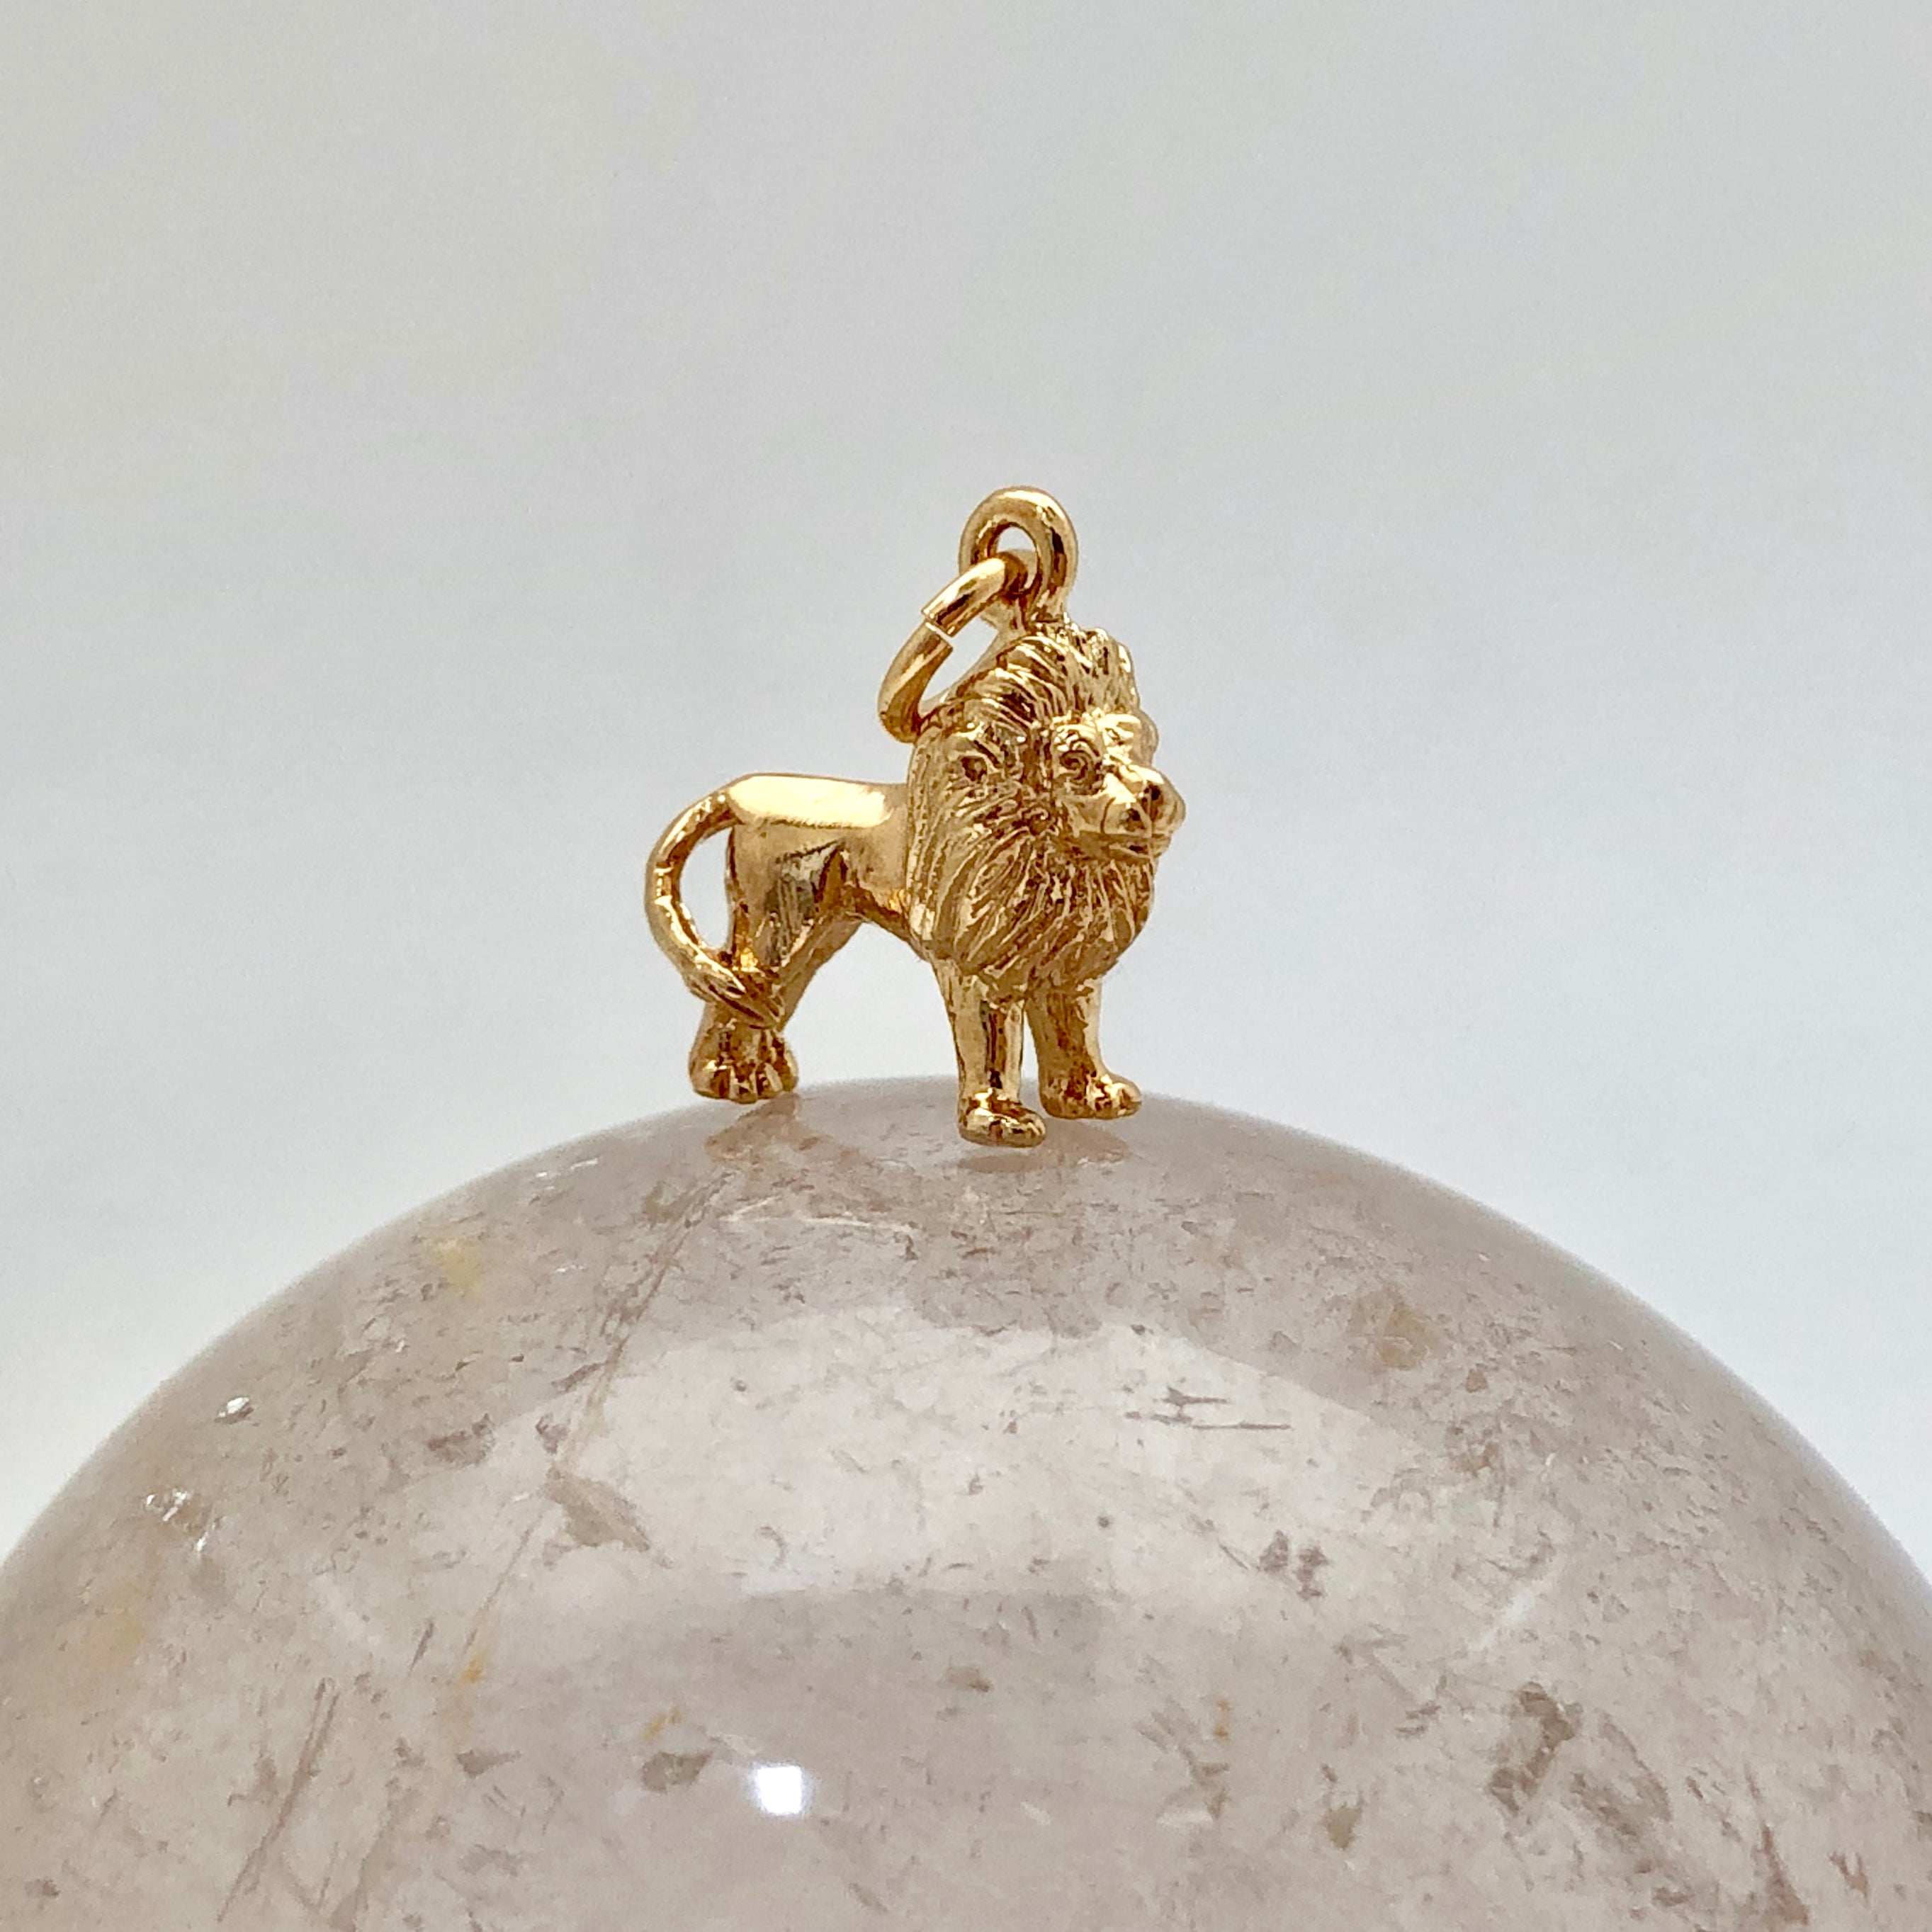 Lion Charm - Mirabelle Jewellery